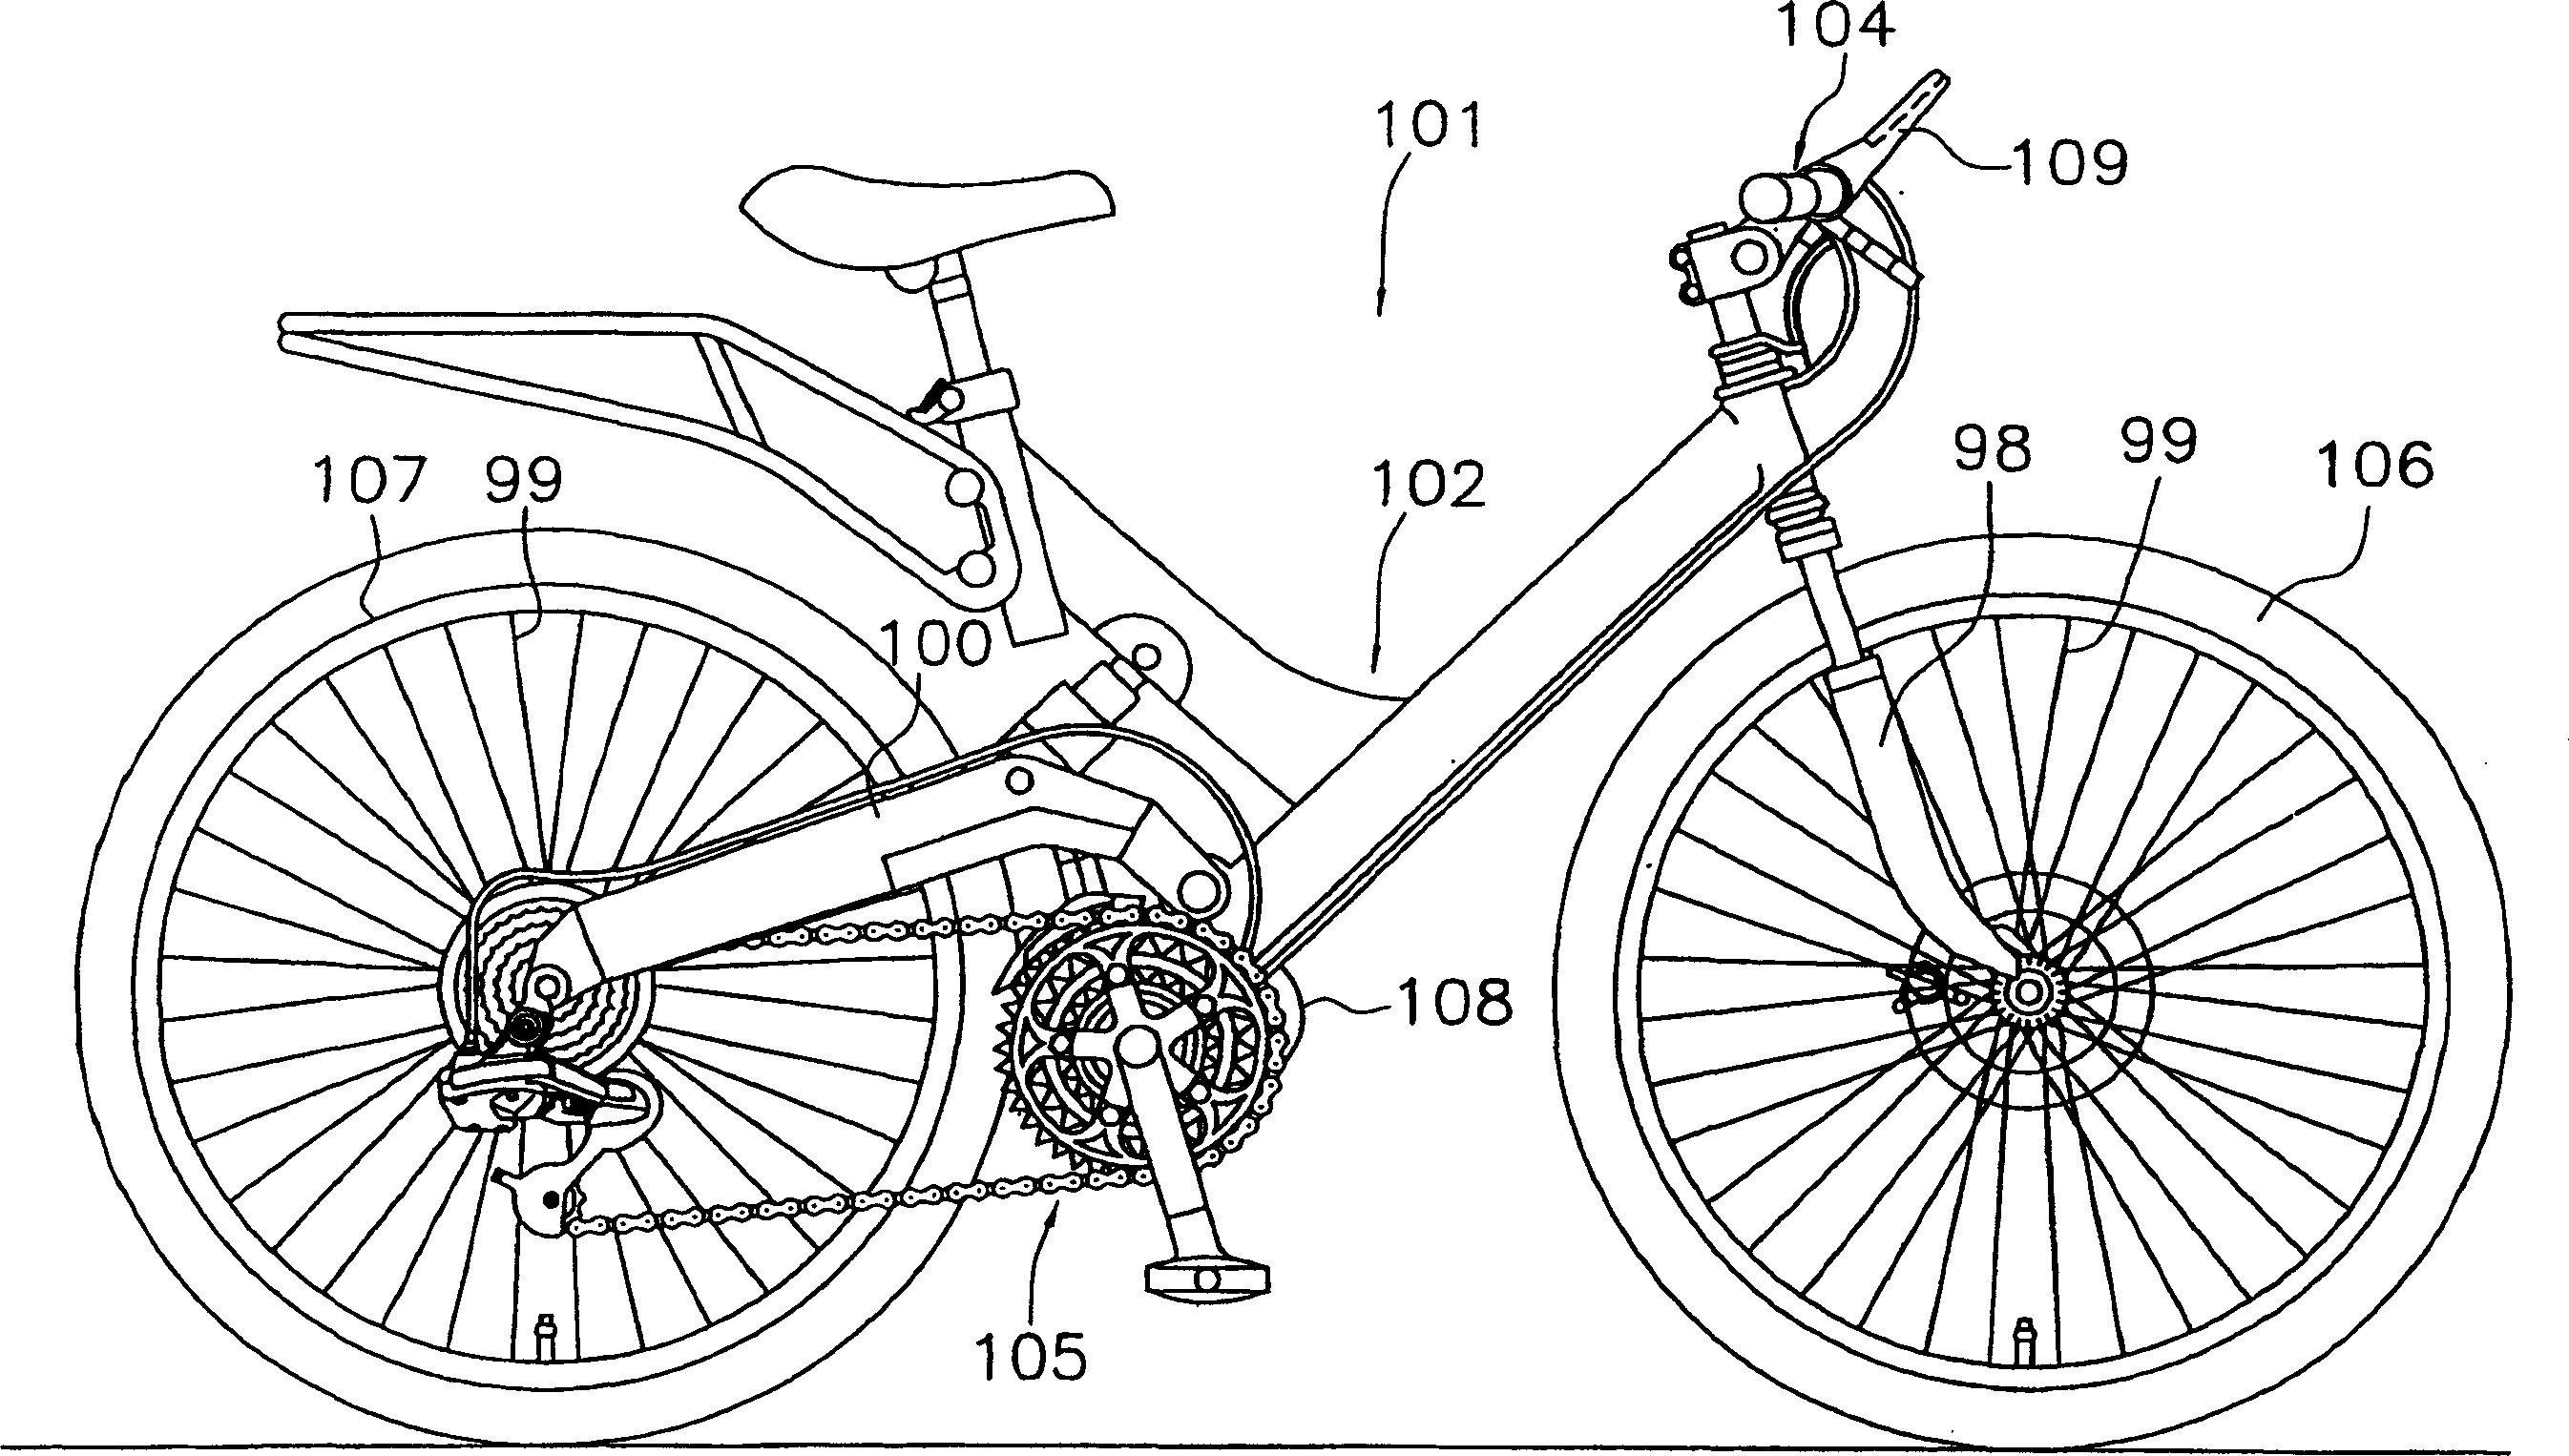 Hub generator for bicycle